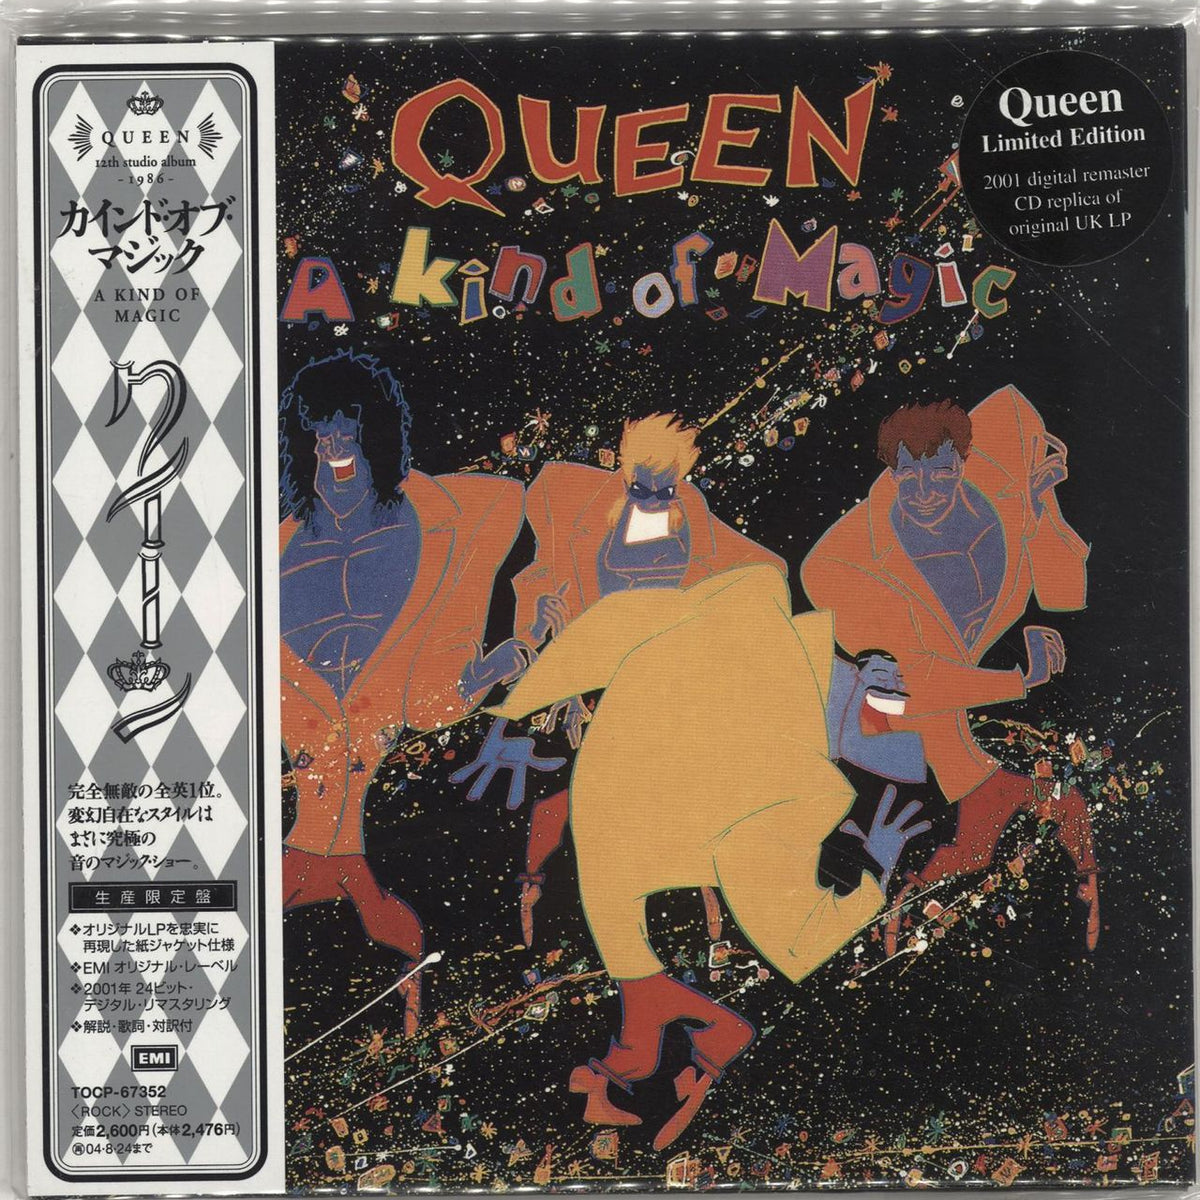 Queen A Kind Of Magic Japanese CD album — RareVinyl.com